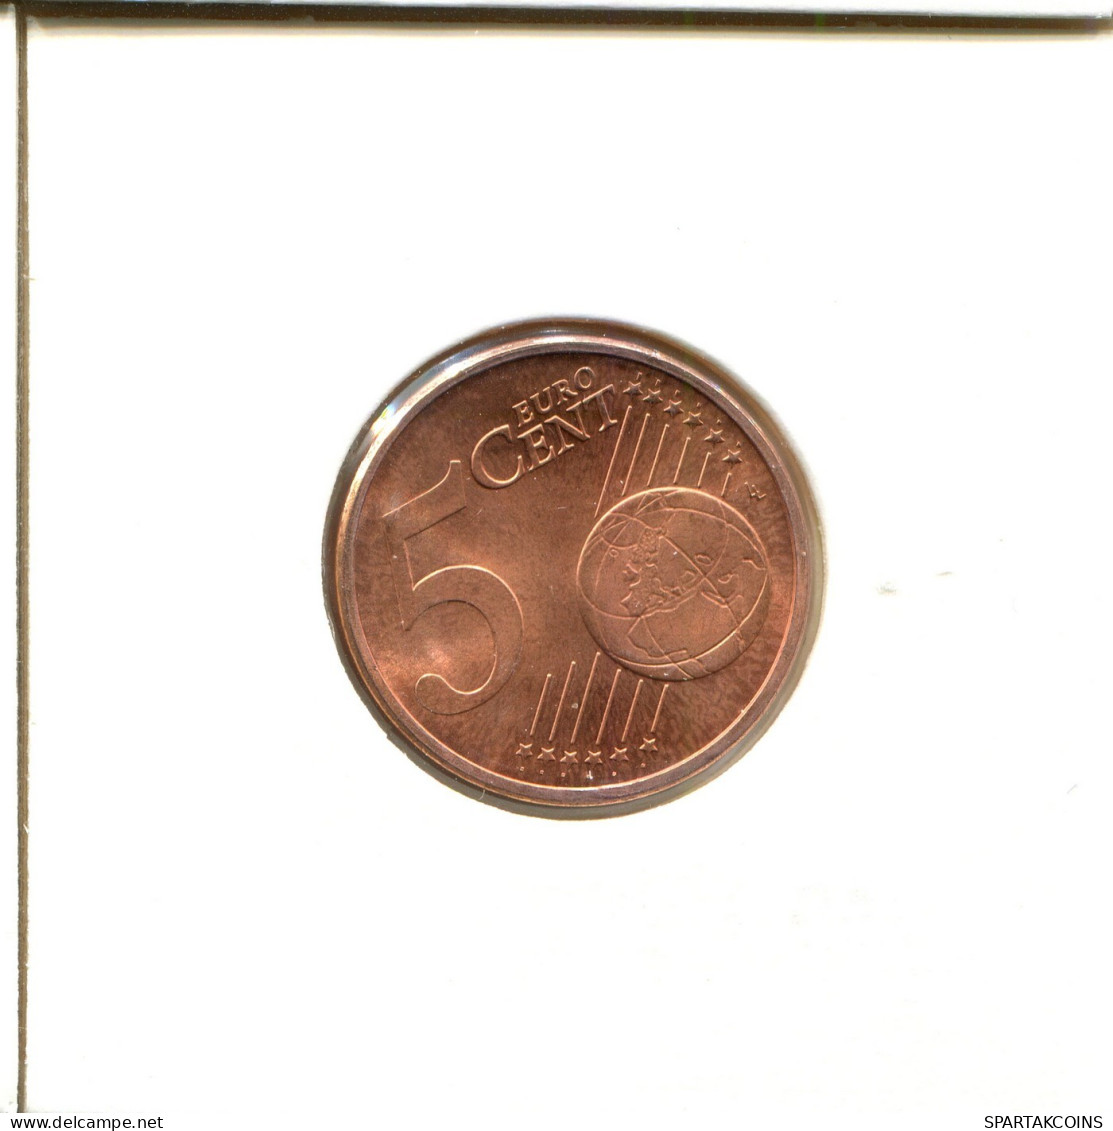 5 EURO CENTS 2008 GERMANY Coin #EU479.U.A - Deutschland